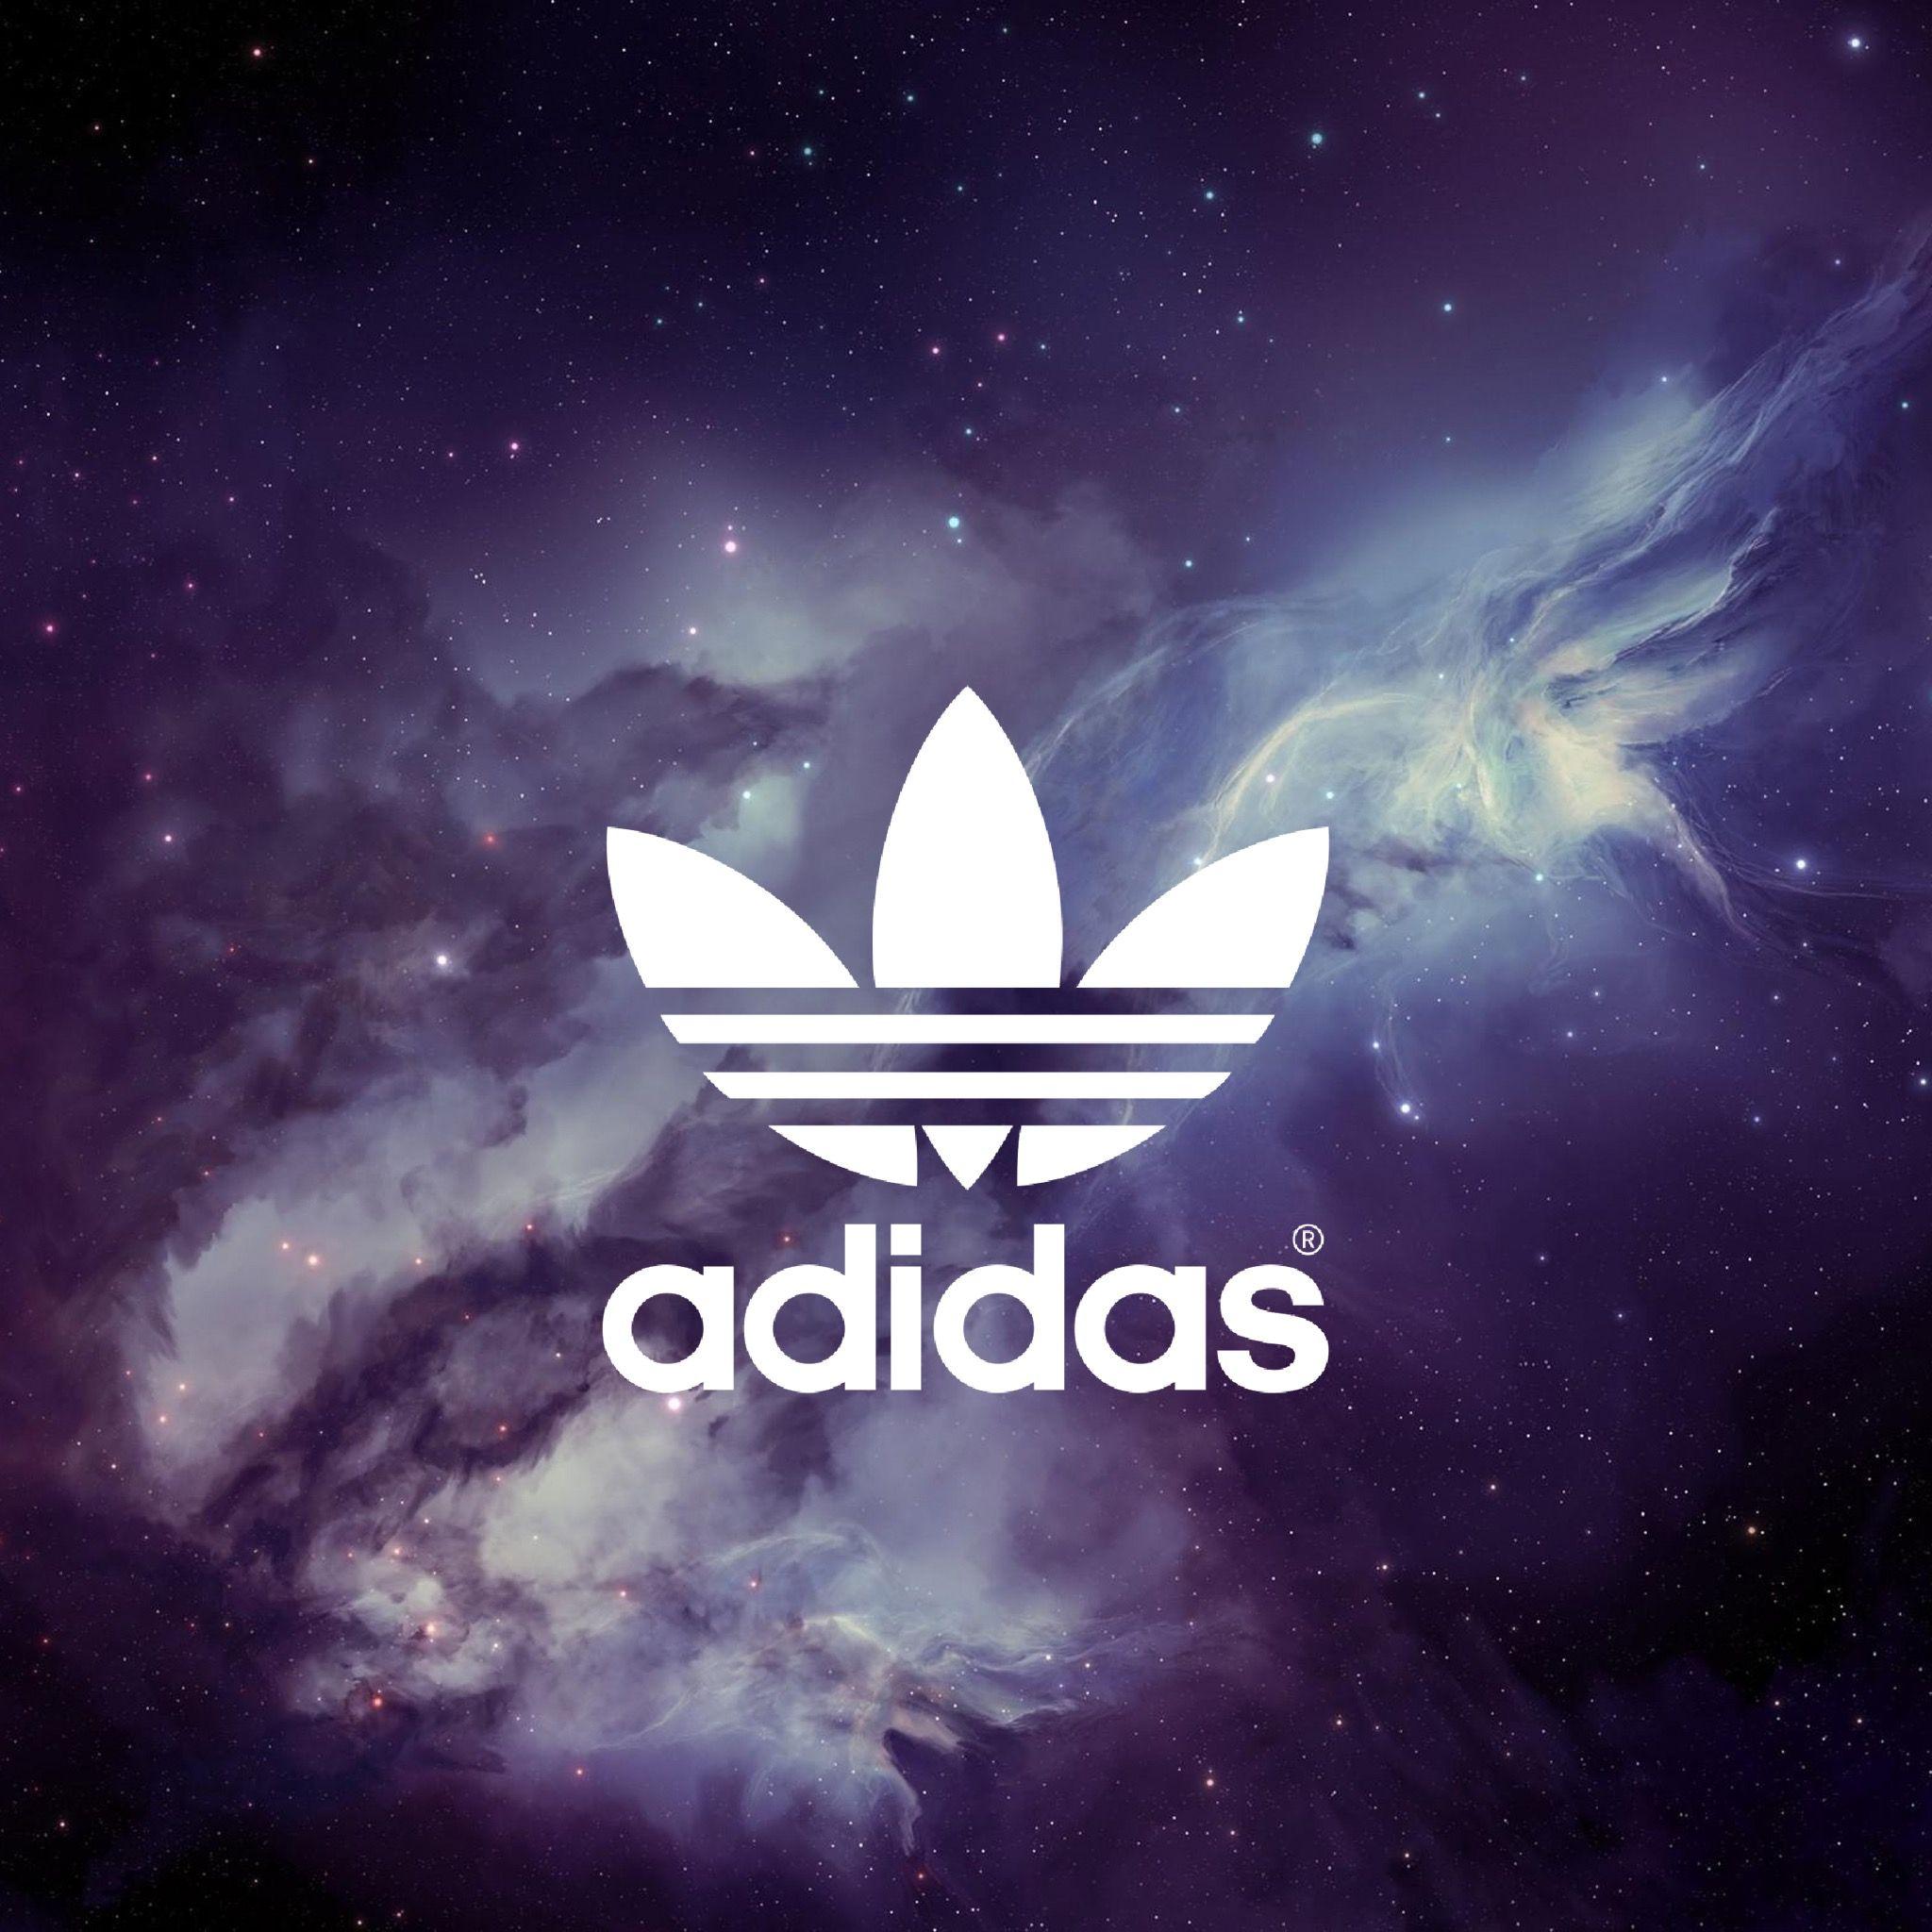 Adidas Galaxy Logo - Adidas Galaxy Wallpaper. WALPAPERS. Galaxy wallpaper